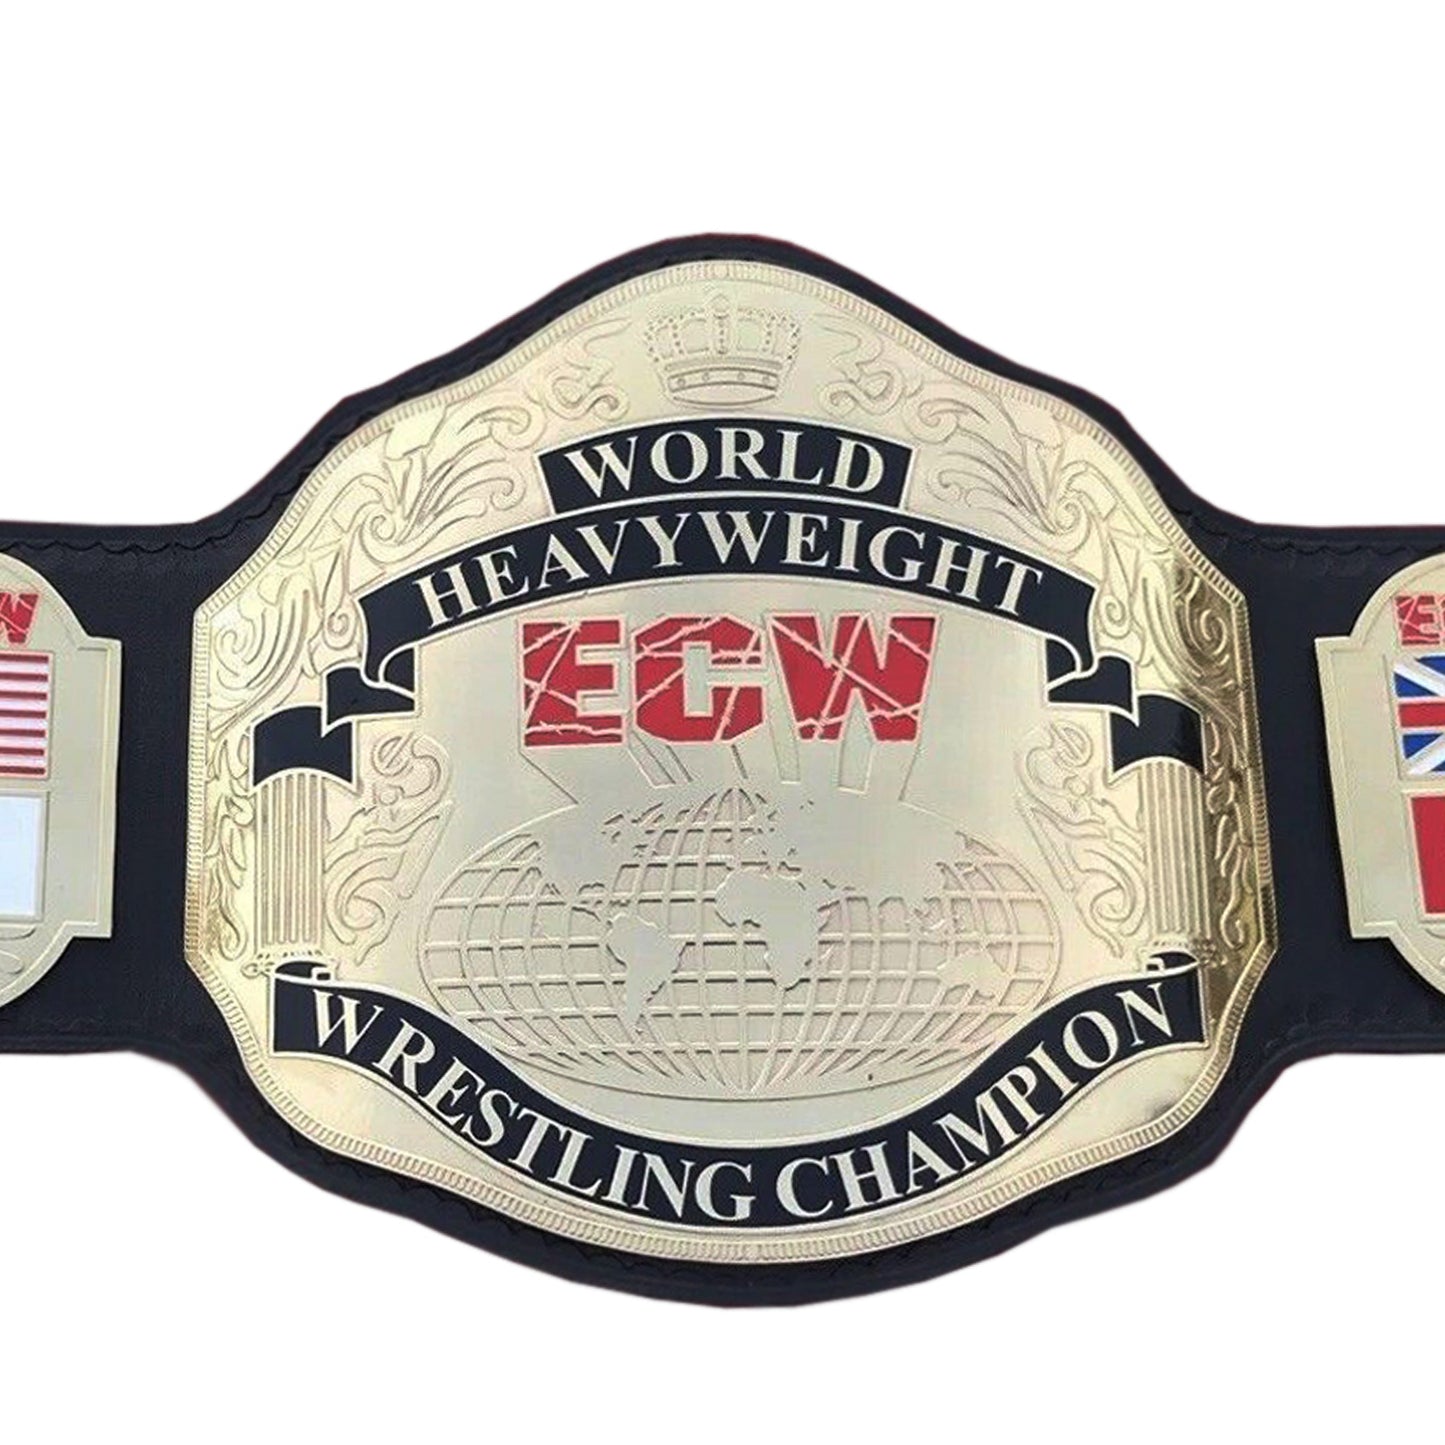 ECW World Heavyweight Championship Wrestling Title Belt